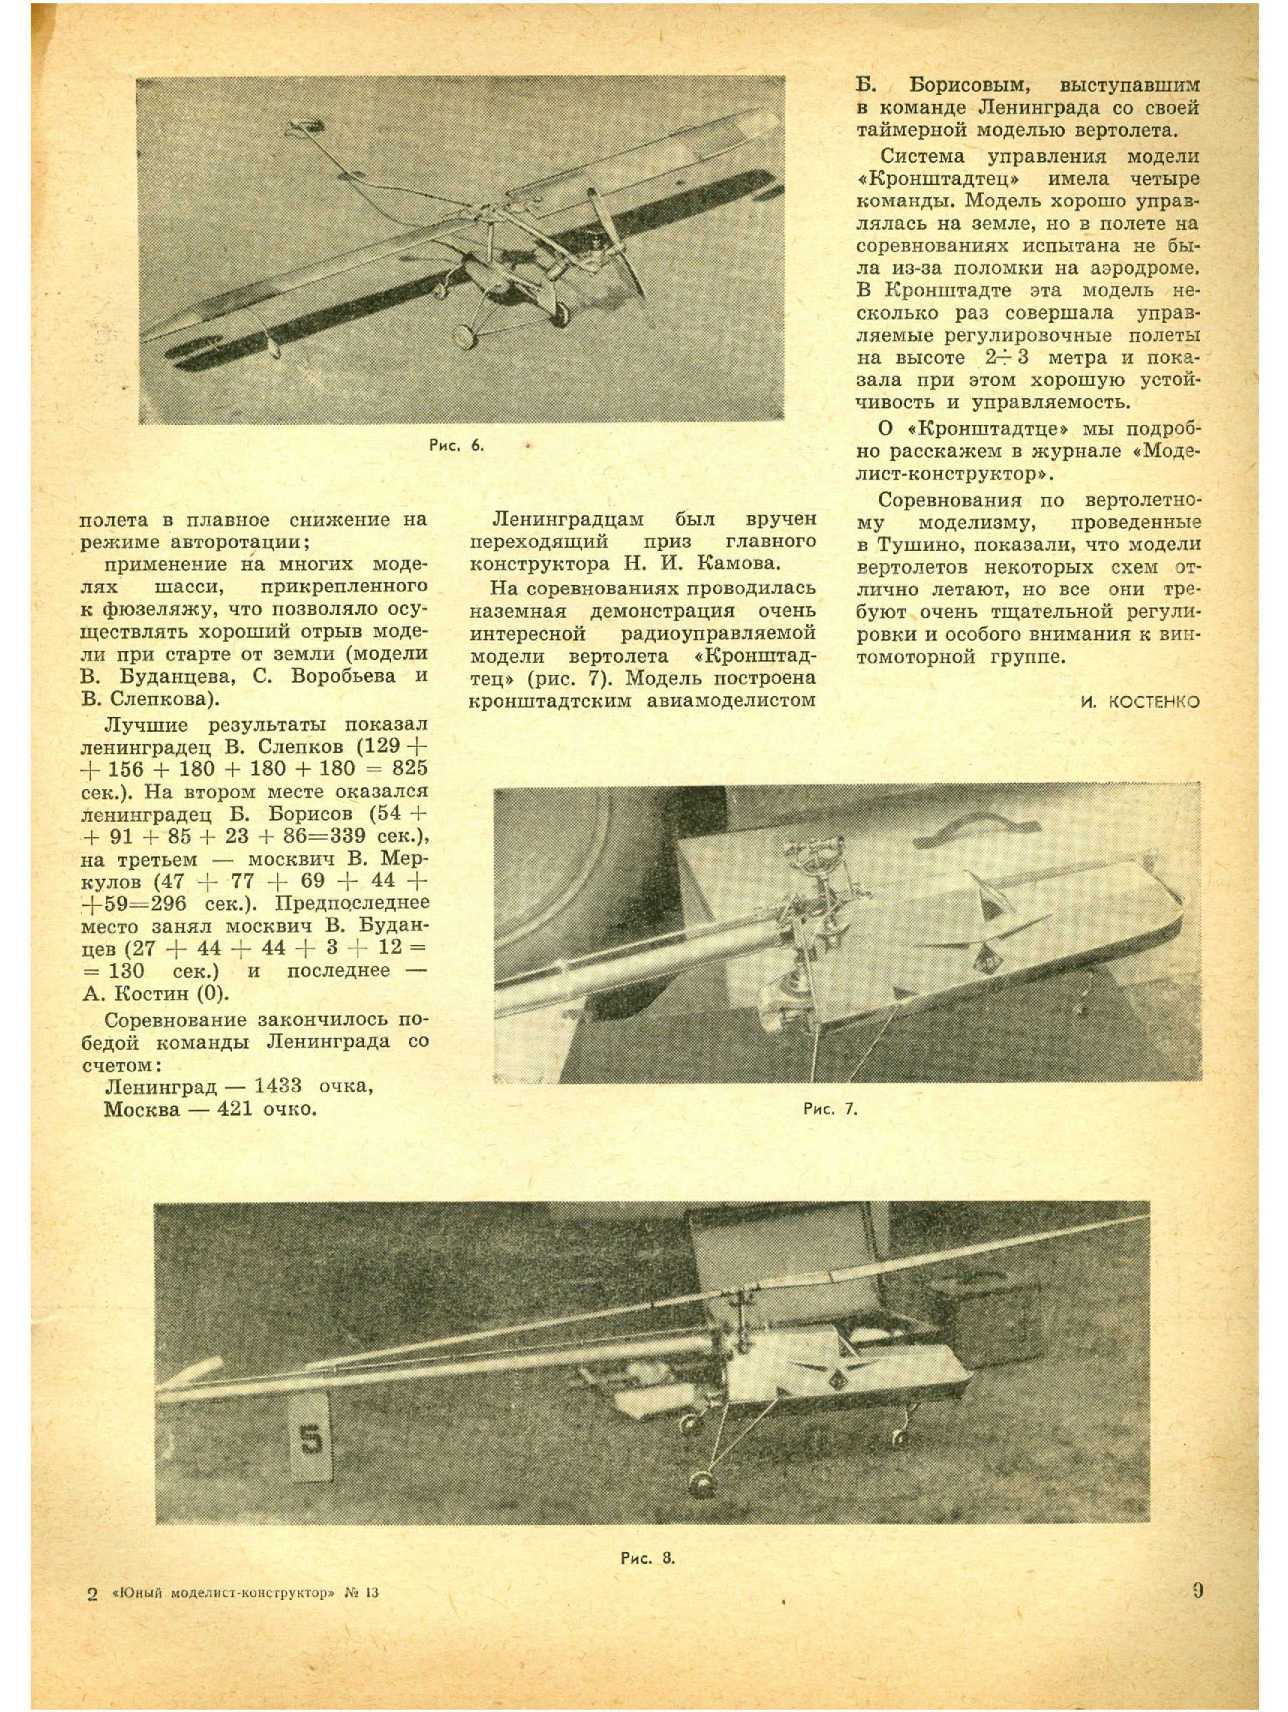 ЮМК 13, 1965, 9 c.